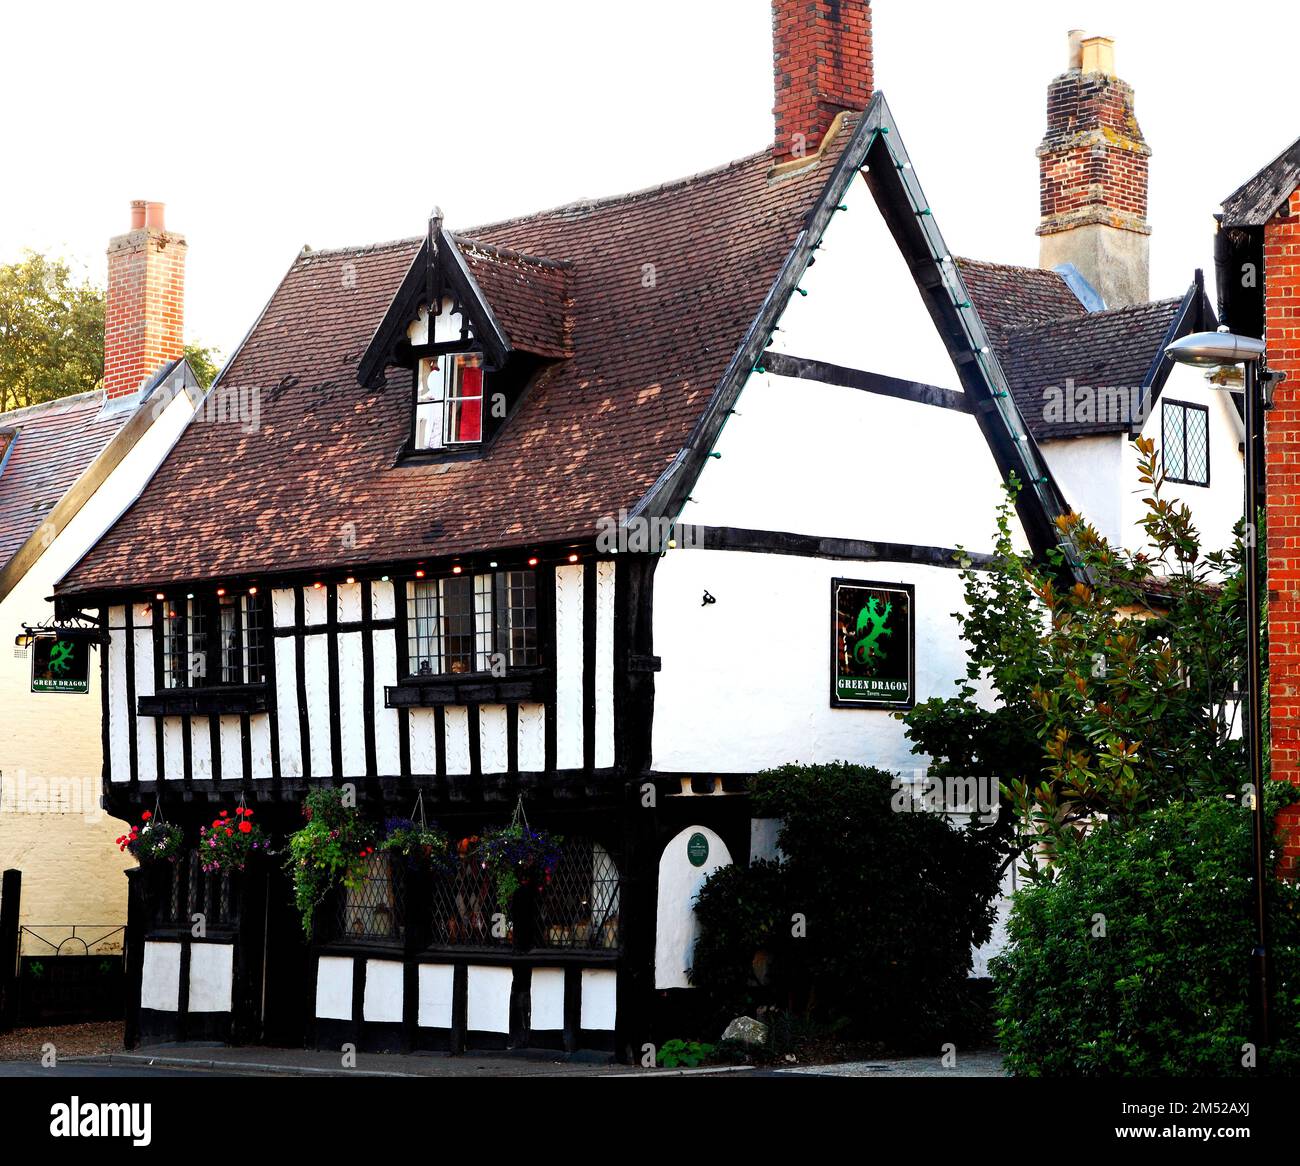 Wymondham, Norfolk, The Green Dragon, mid 15th century, timbered building, pub, public house, England, UK Stock Photo